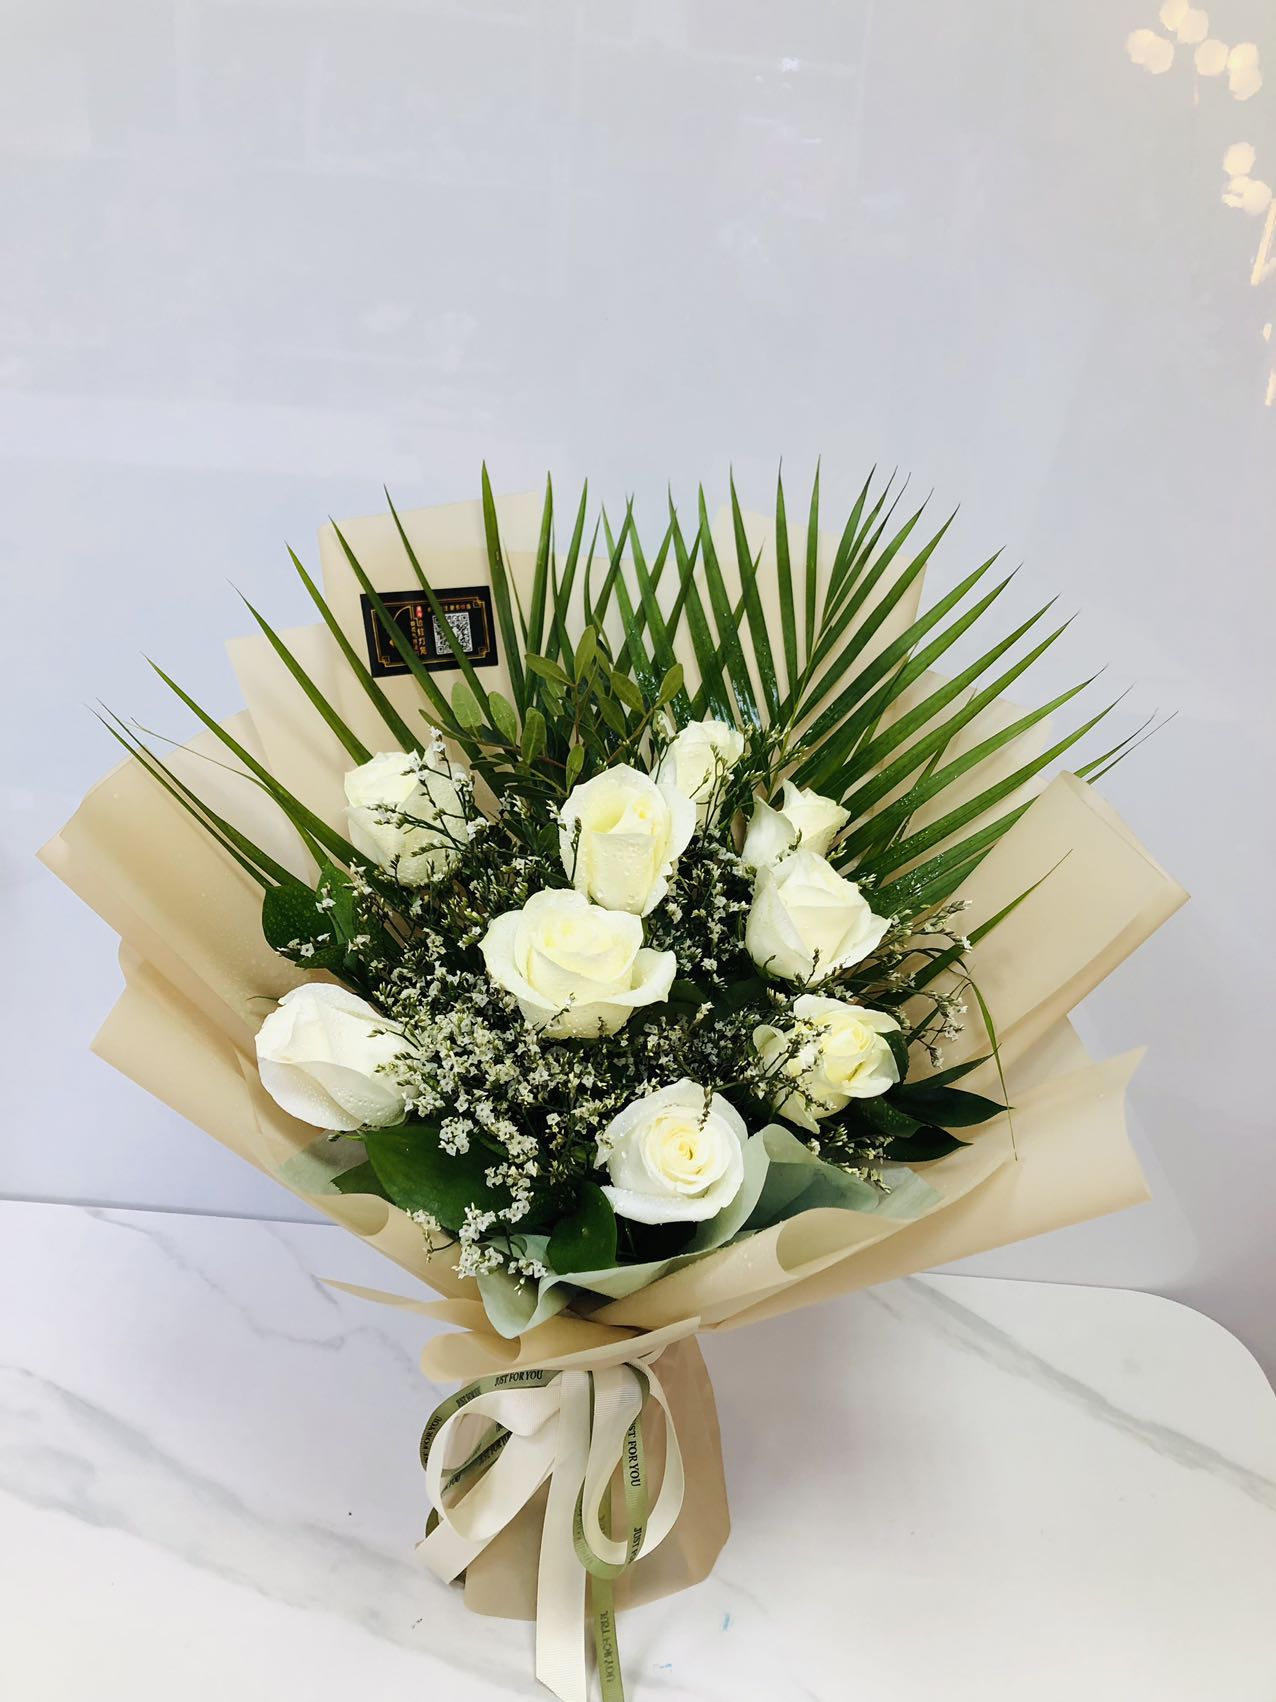 White Rose in Cream Bouquet | Flower Gift Center